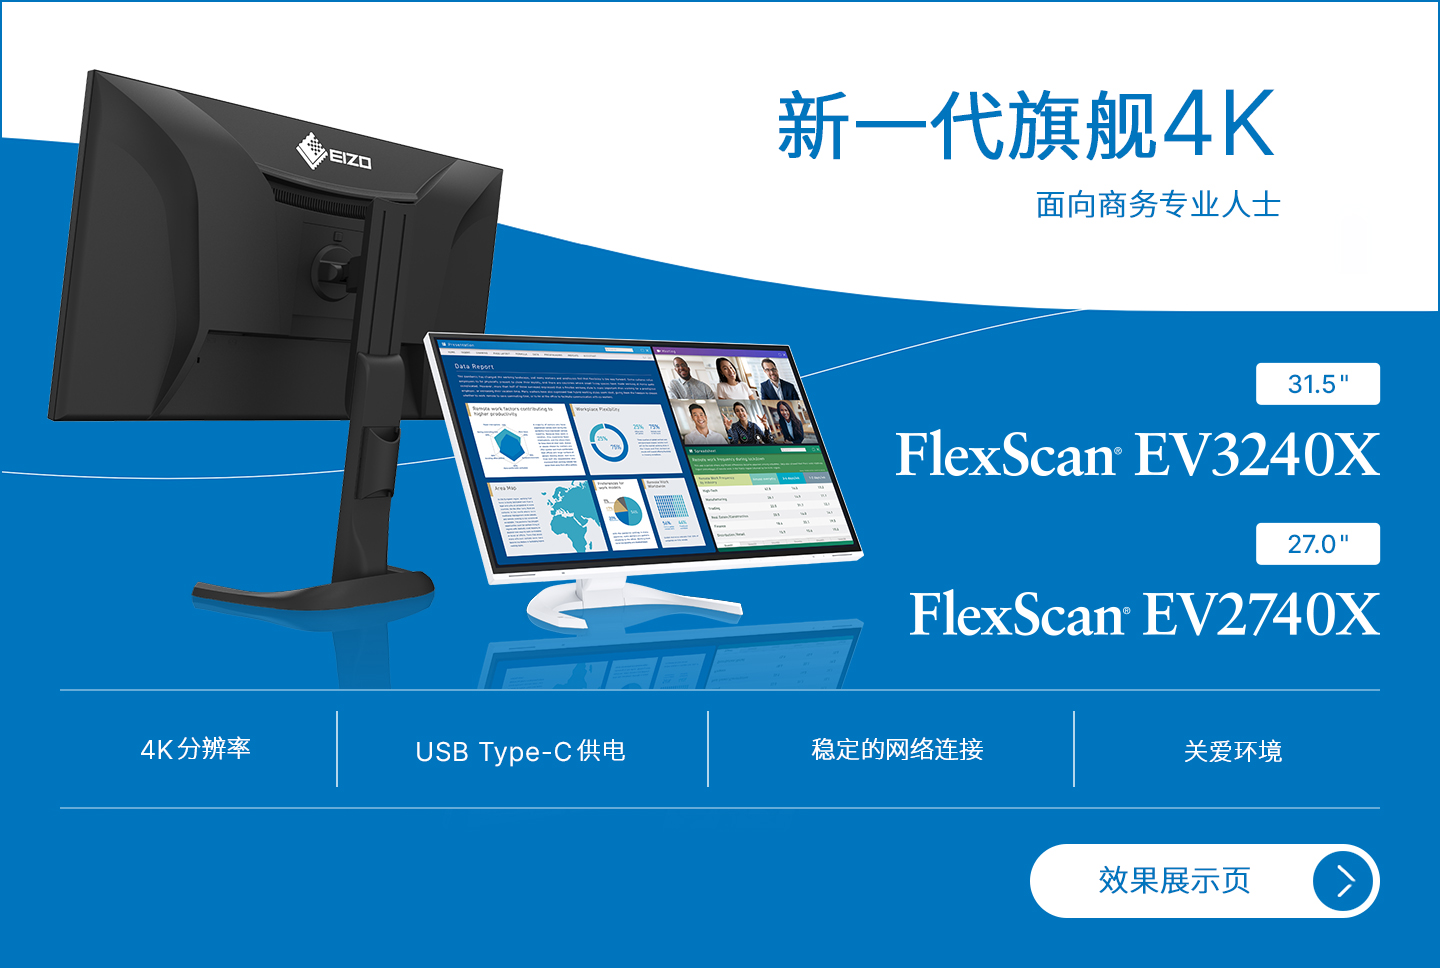 FlexScan EV3240X / EV2740X special page